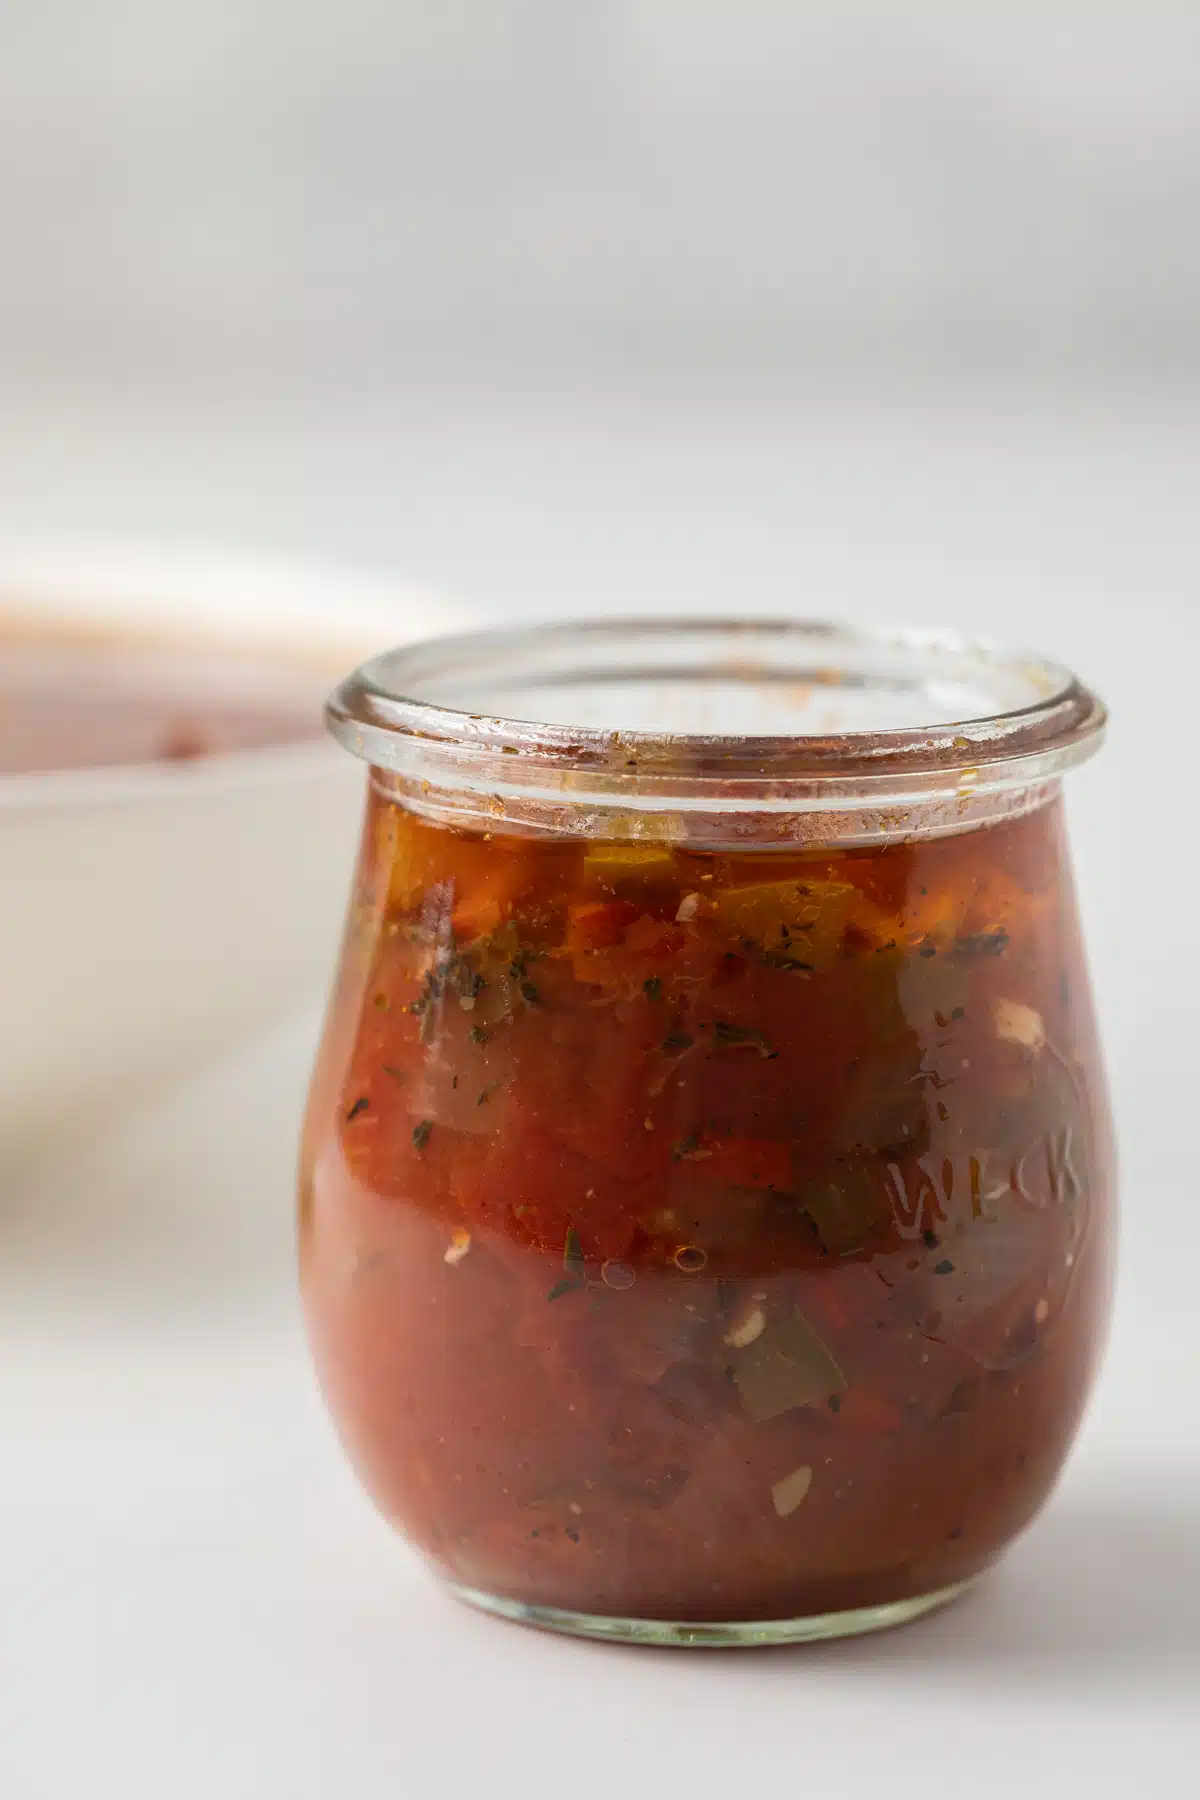 Creole sauce in glass jar.